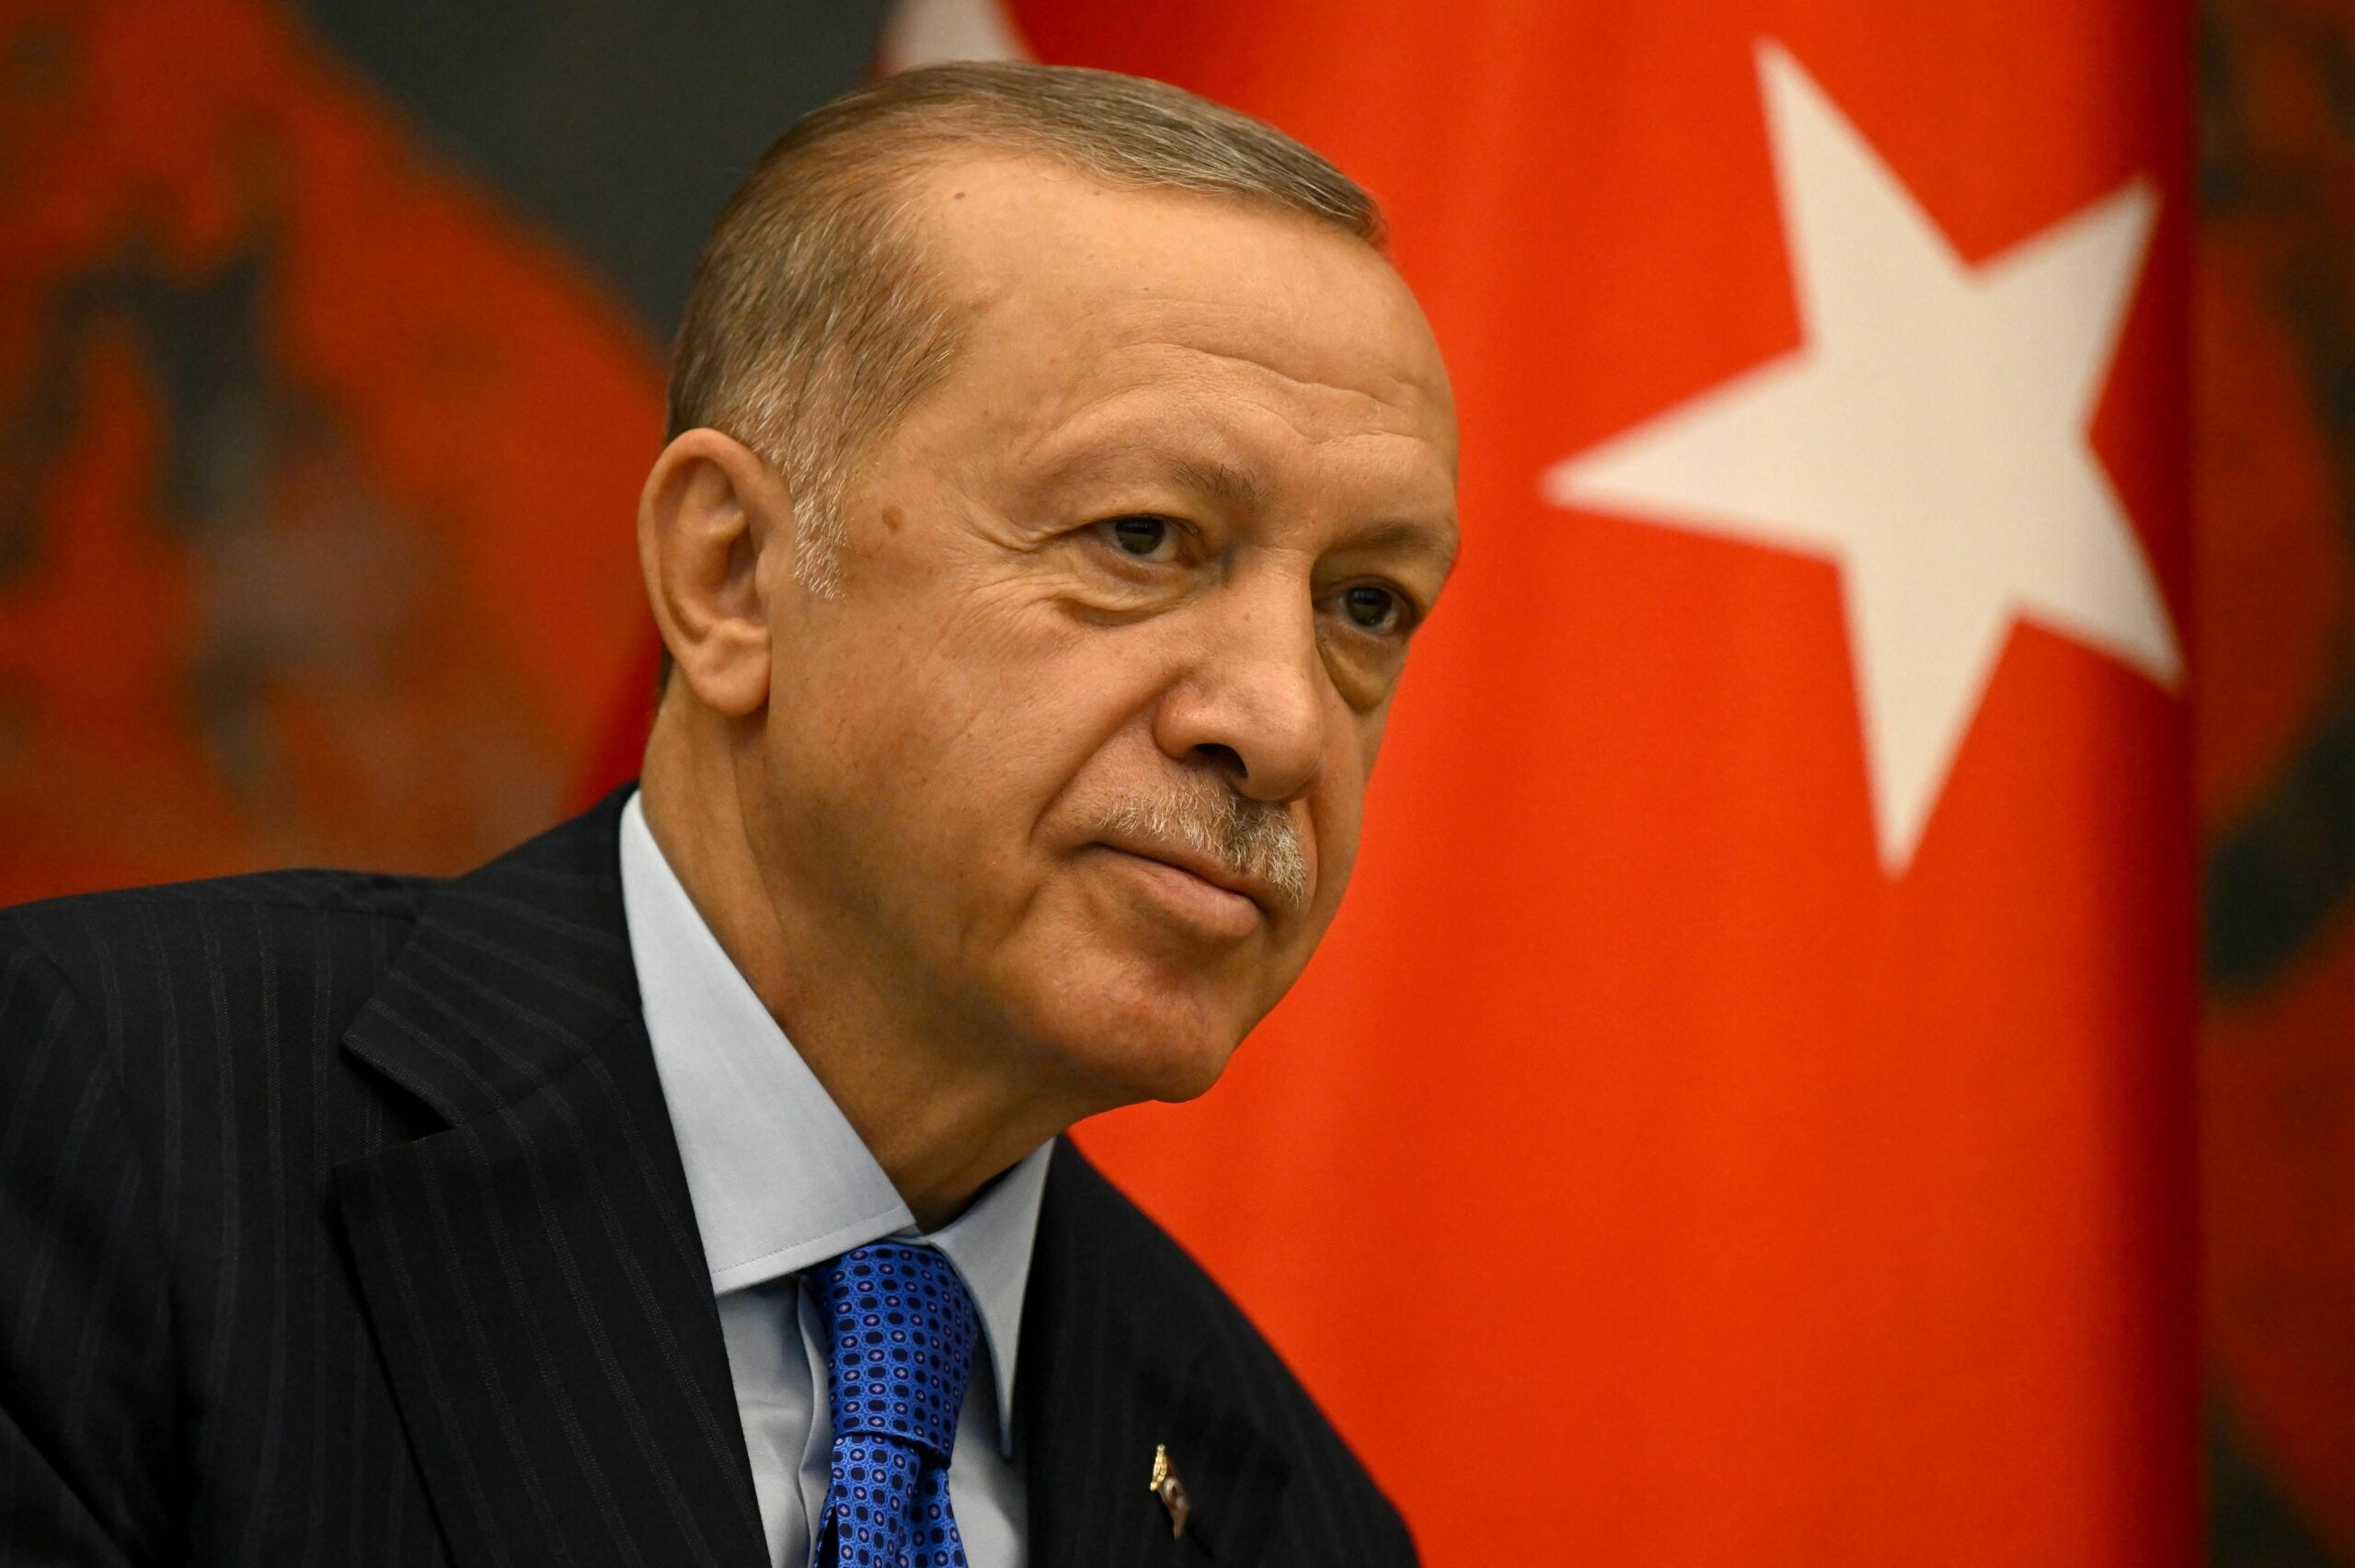 Recep Tayyip Erdoğan, Turkey’s Leader